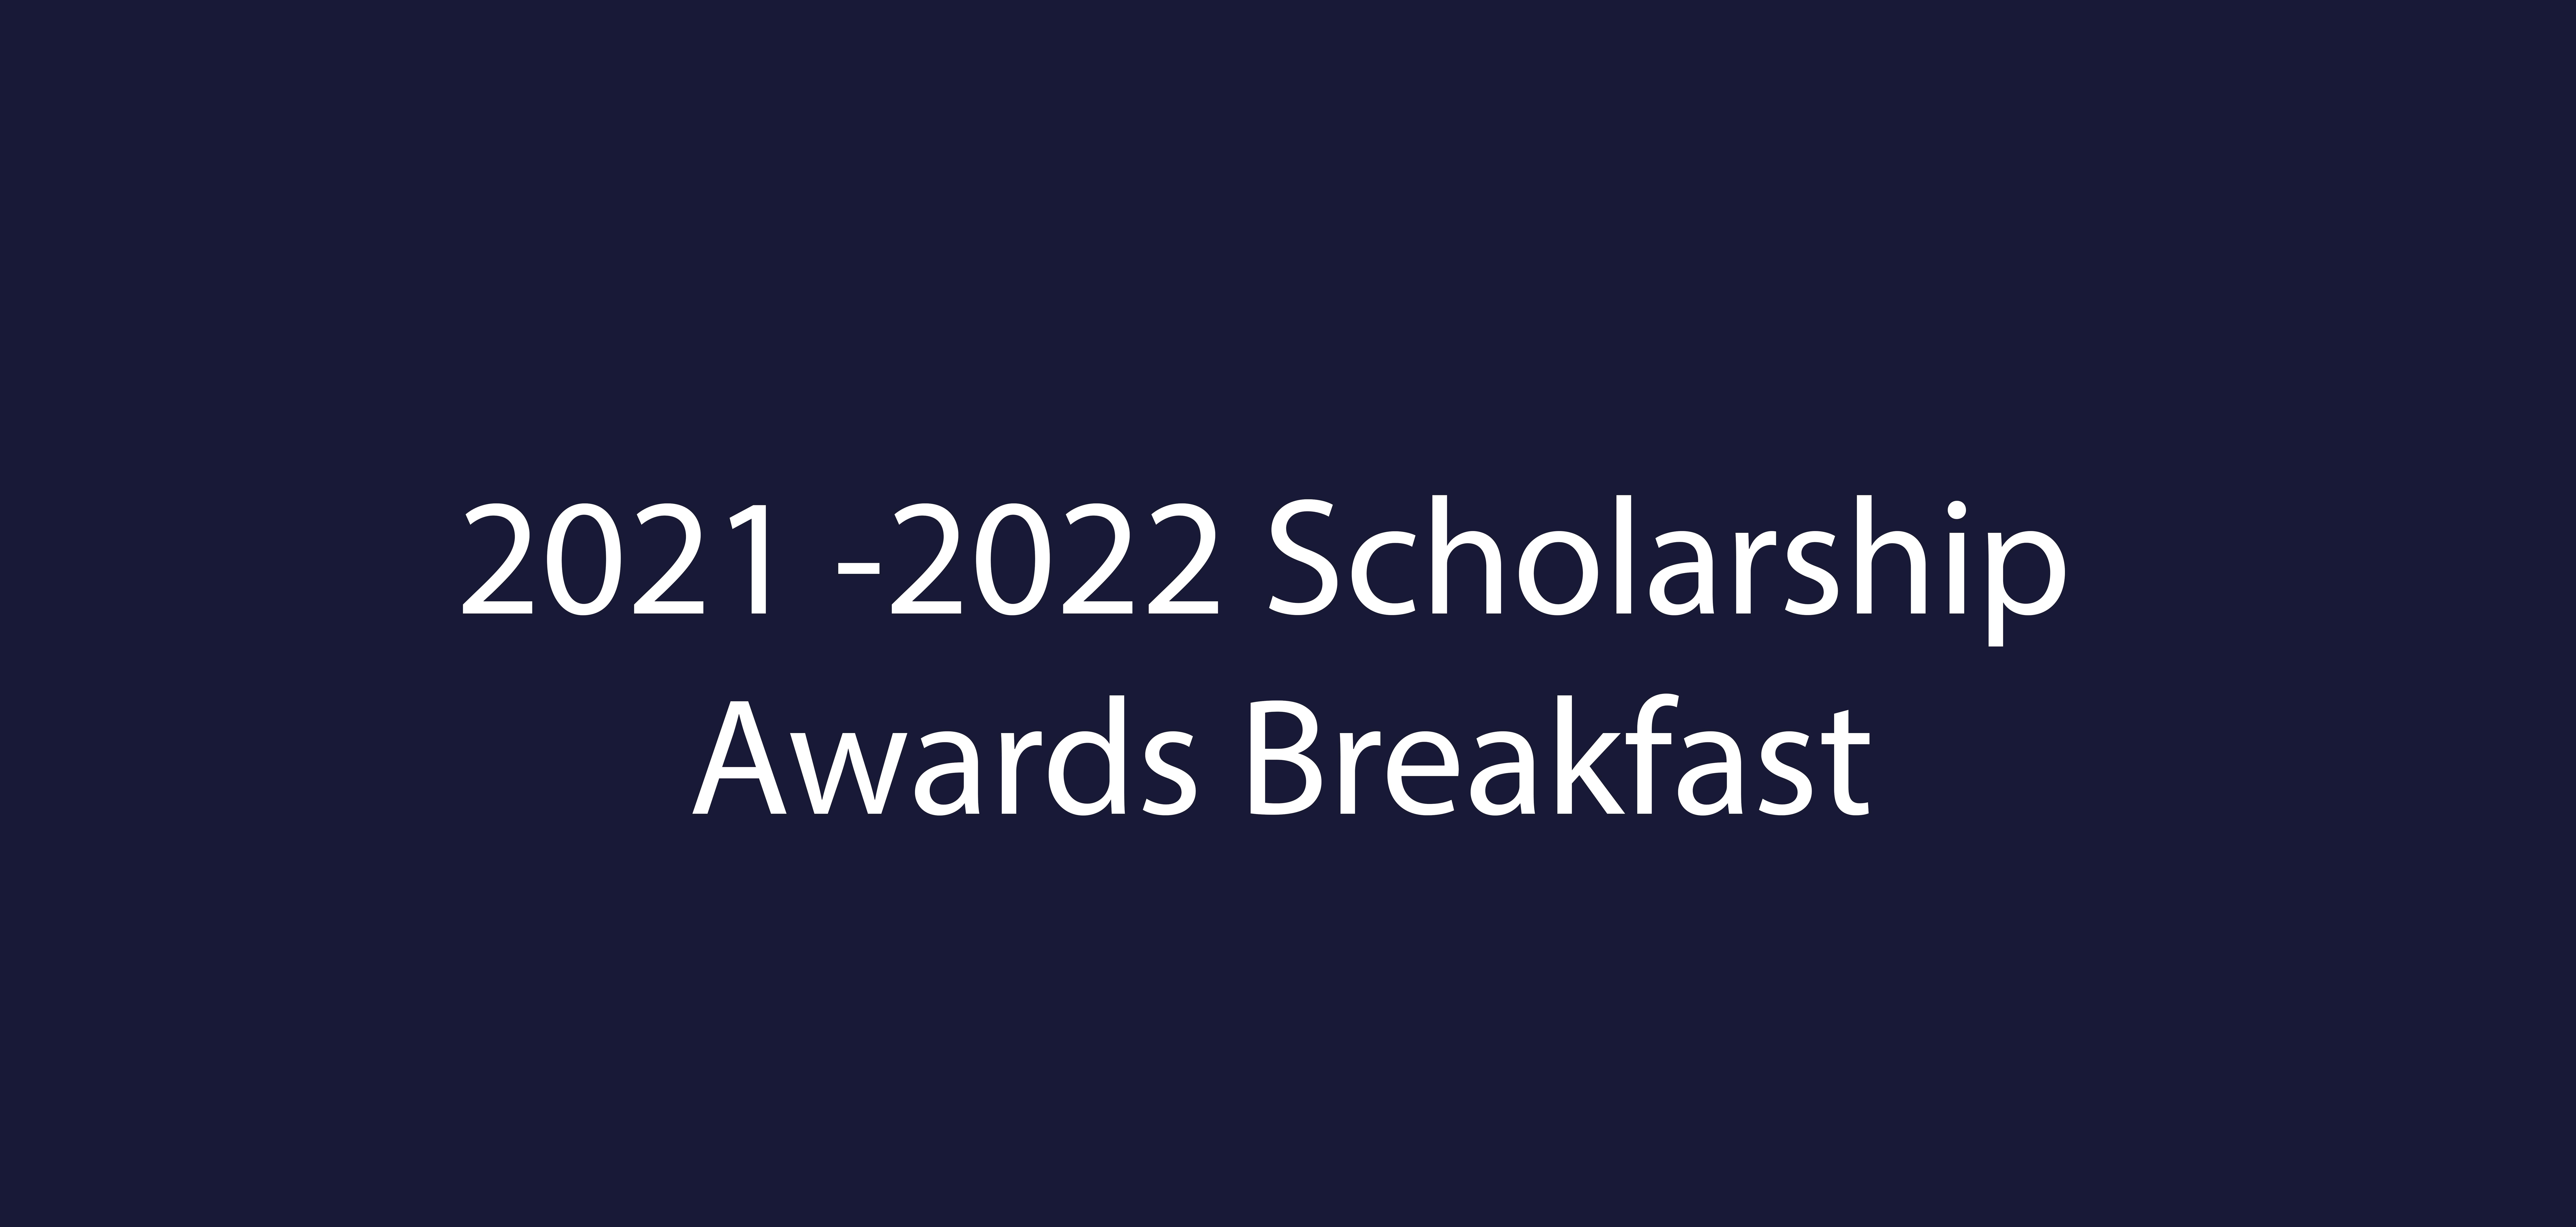 2022 Scholarship Awards Breafkast